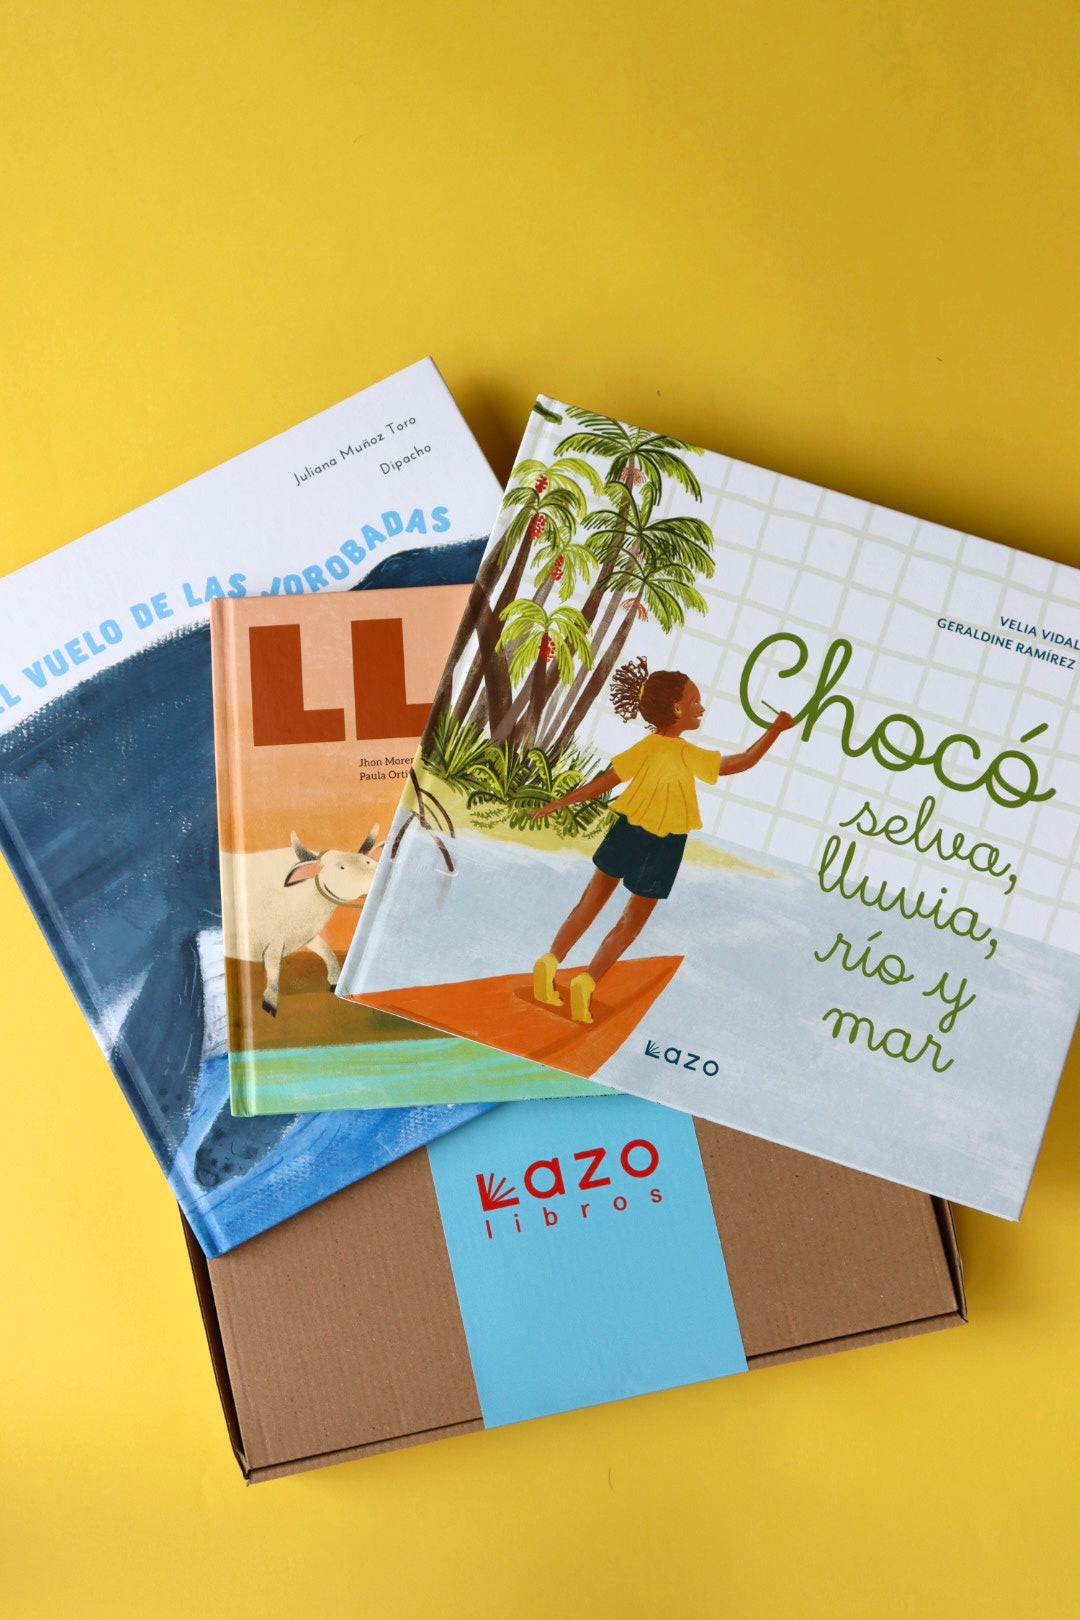 Kit - 3 libros sobre Colombia